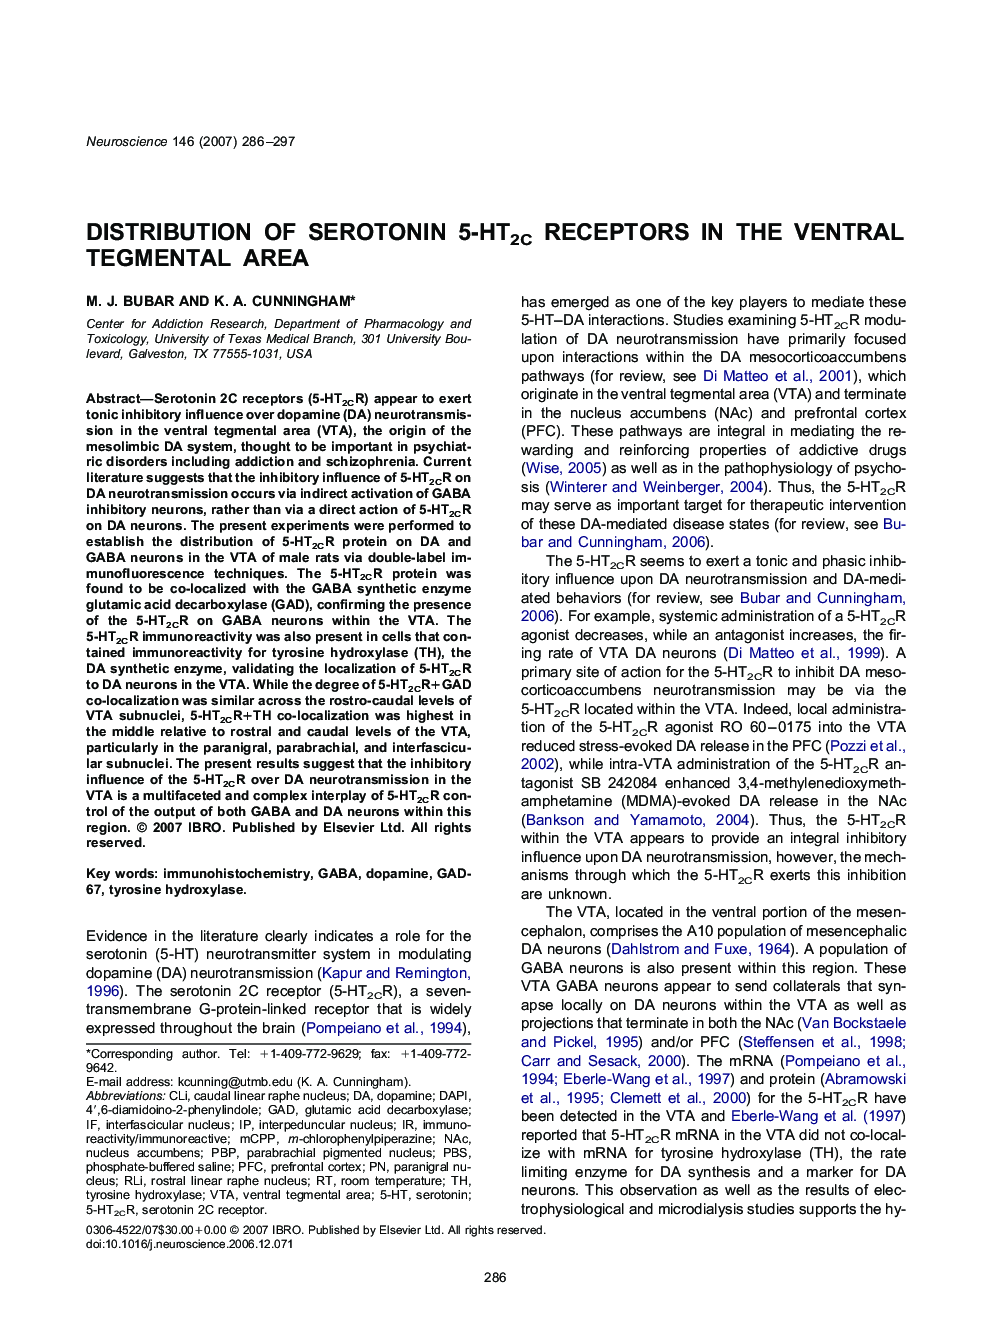 Distribution of serotonin 5-HT2C receptors in the ventral tegmental area